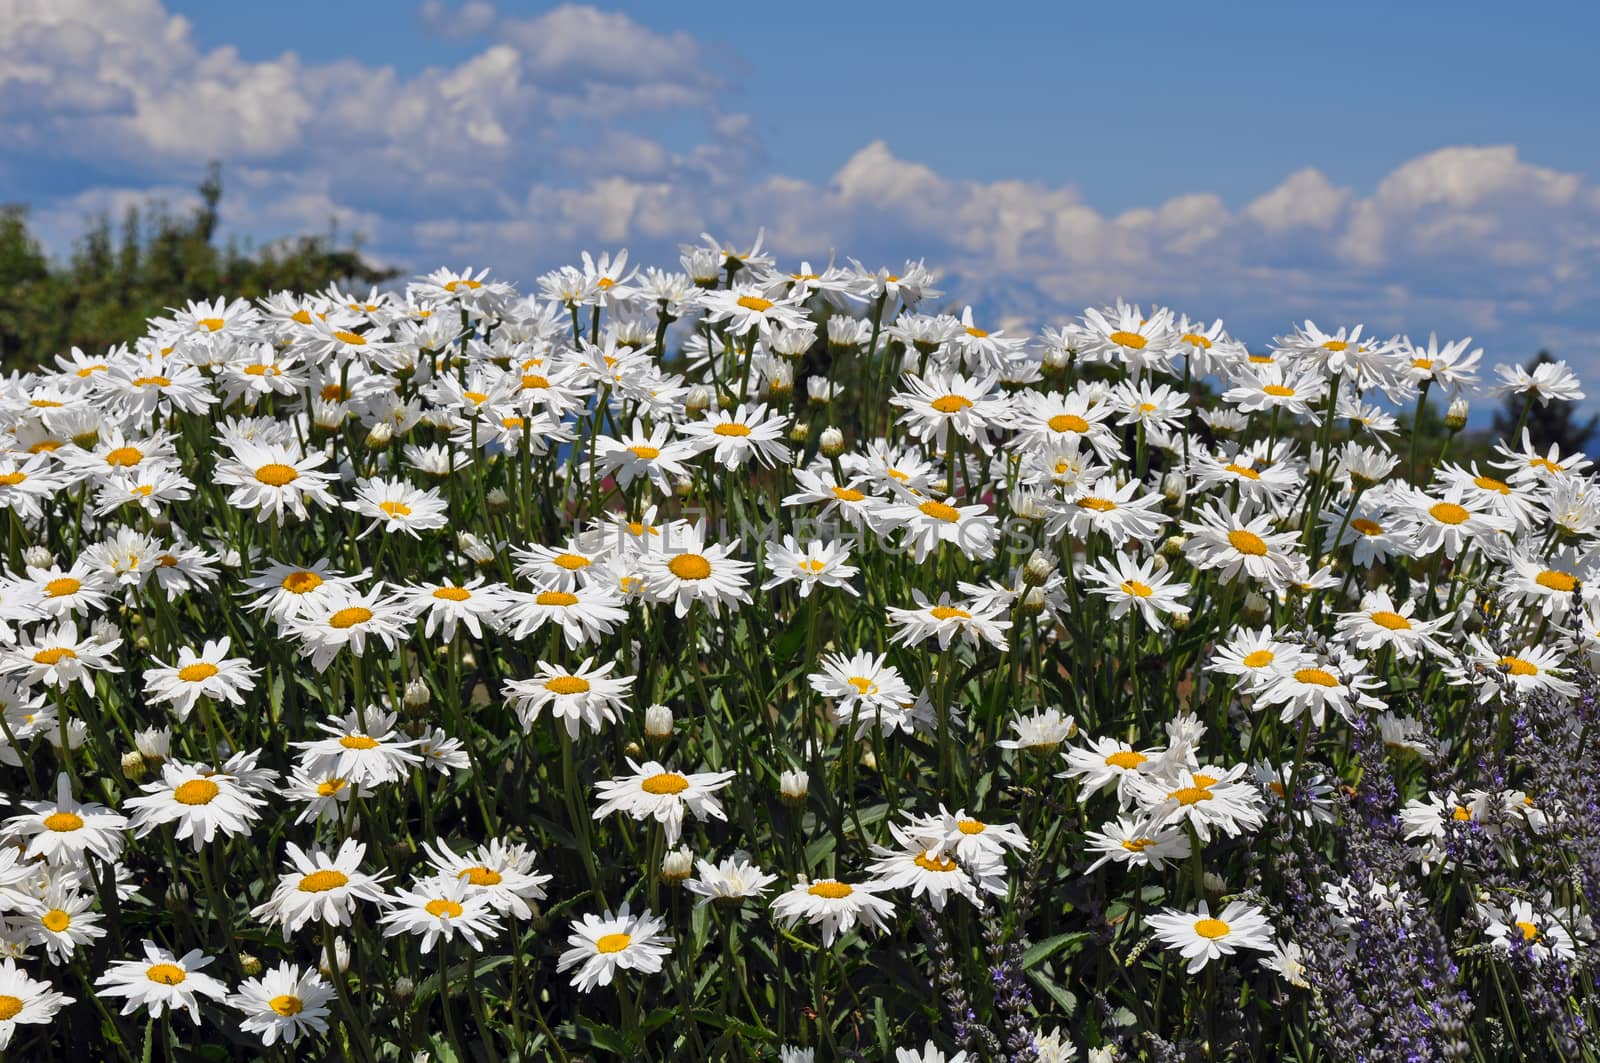 White daisy garden by ingperl